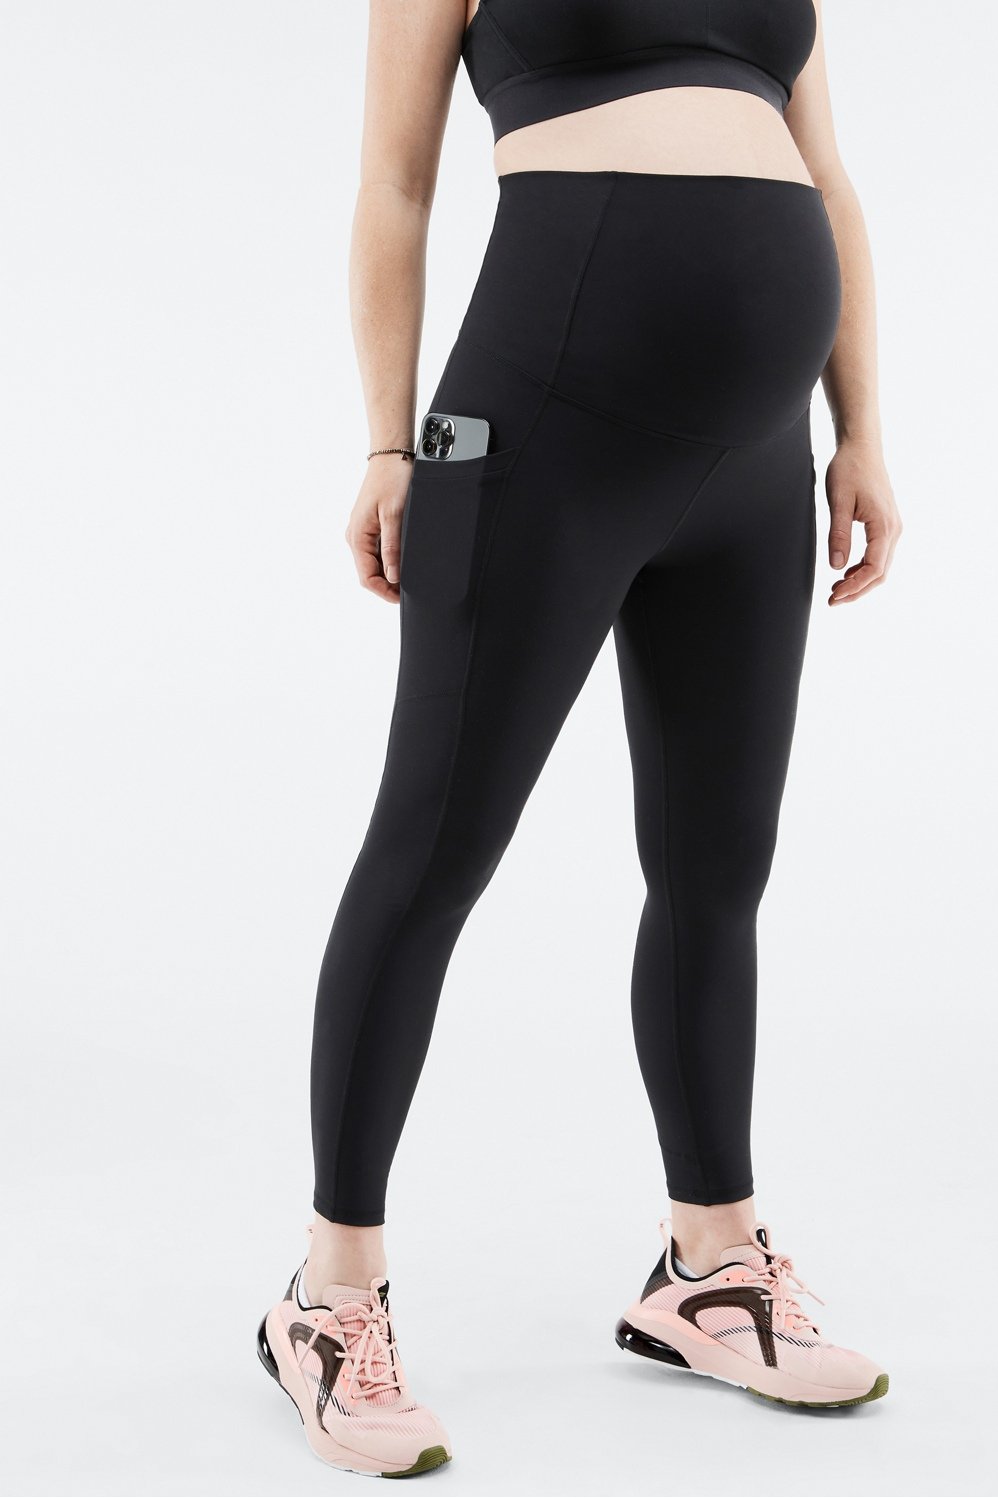 Buy SHAPERX Women's Comfortable Maternity wear Pregnancy Belly Leggings  Elastic WAIS Combo Pack of 2 (XL) Black at